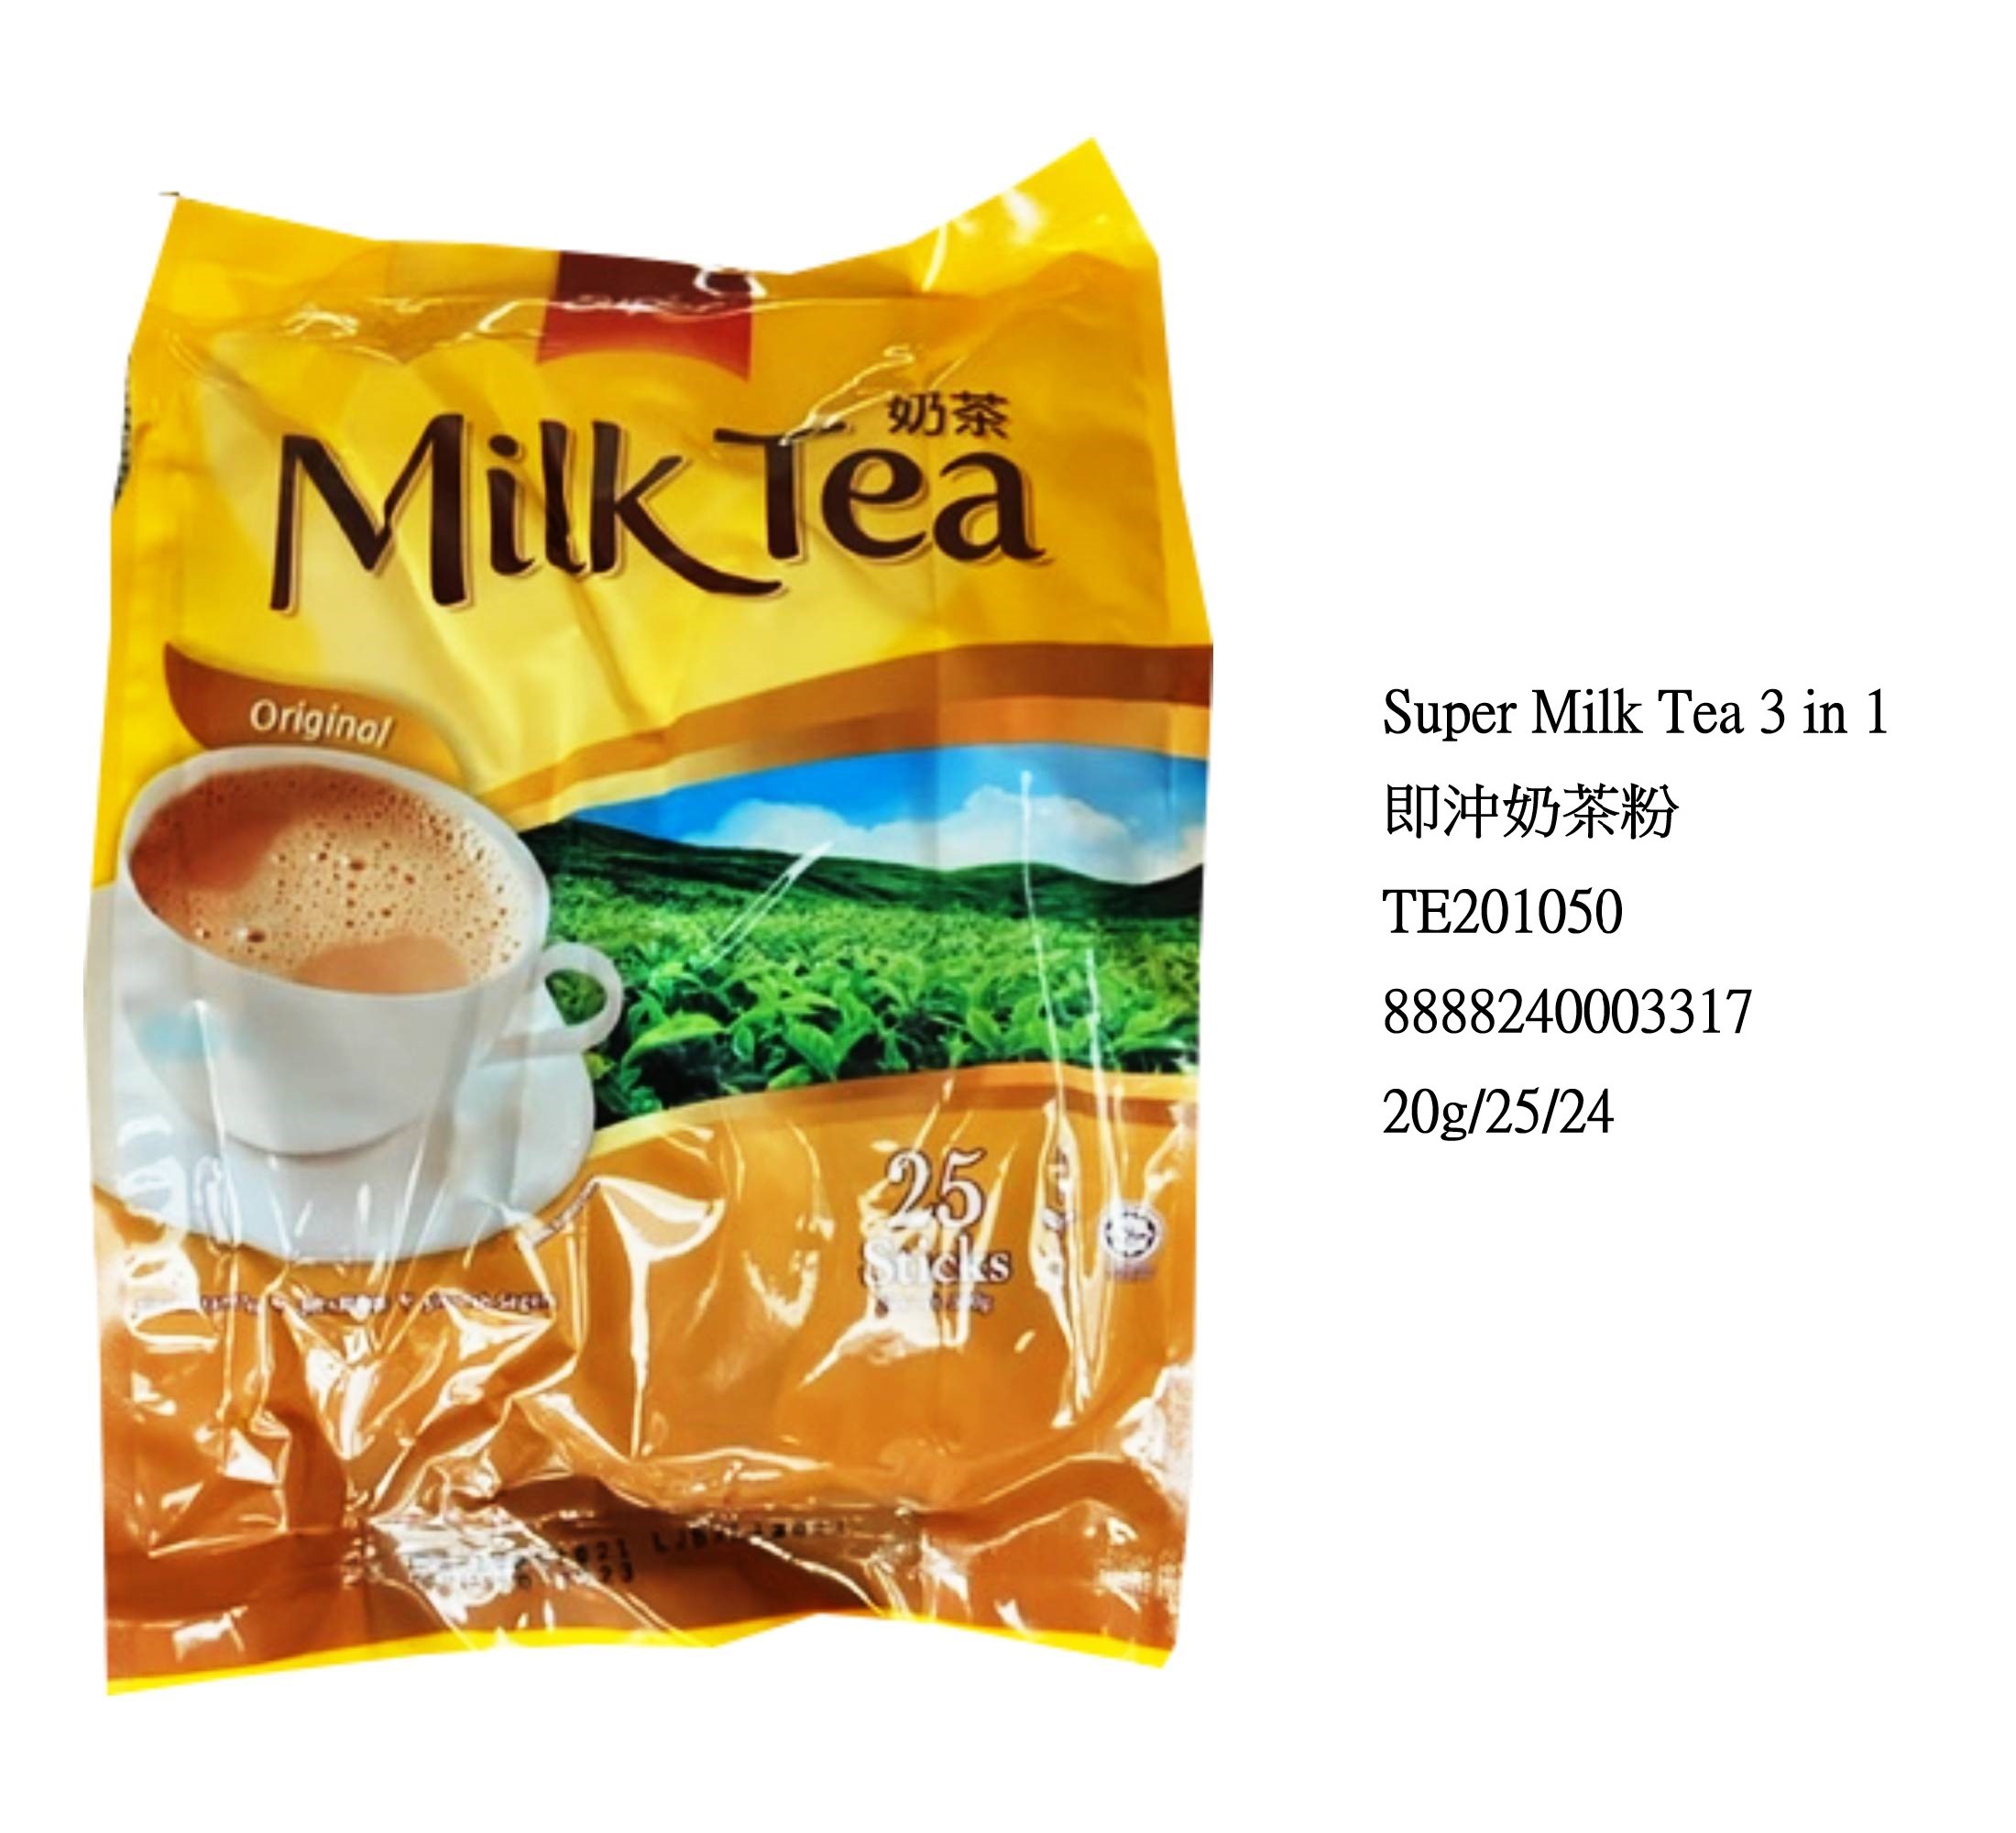 SUPER MILK TEA 3 IN 1 TE201050